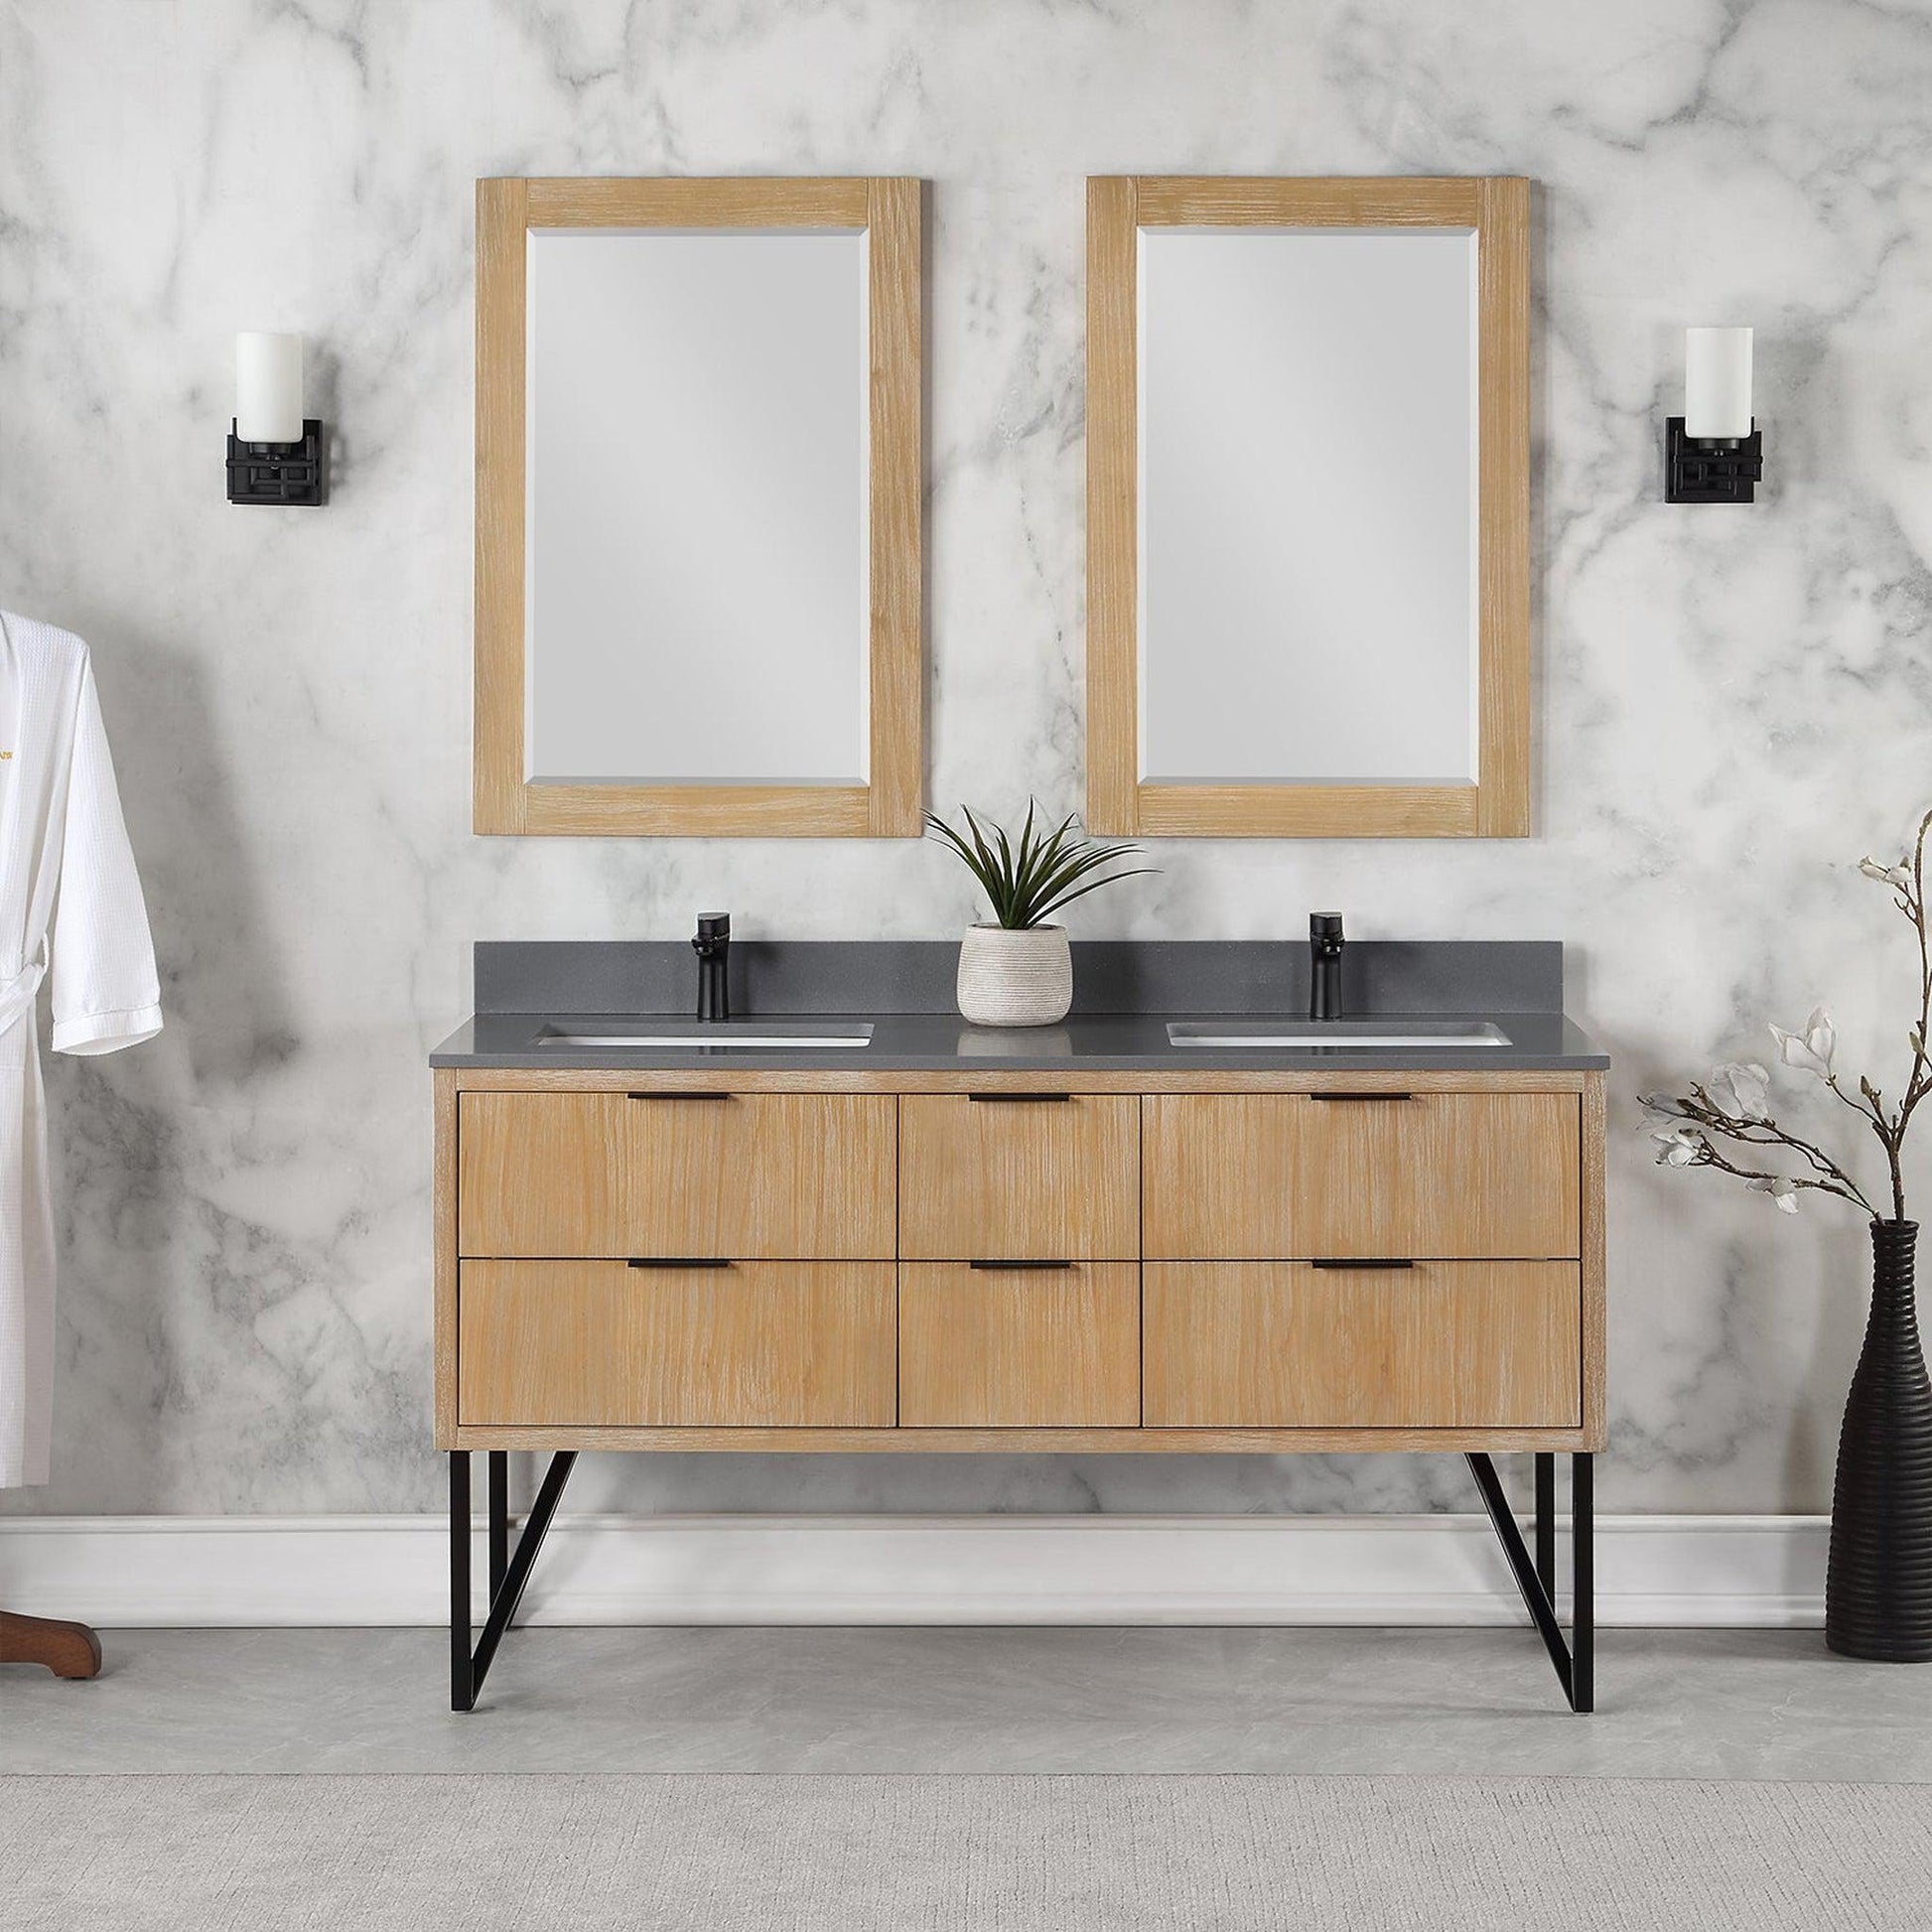 Altair Helios 60" Weathered Pine Freestanding Double Bathroom Vanity Set With Mirror, Concrete Gray Composite Stone Top, Double Rectangular Undermount Ceramic Sinks, Overflow, and Backsplash